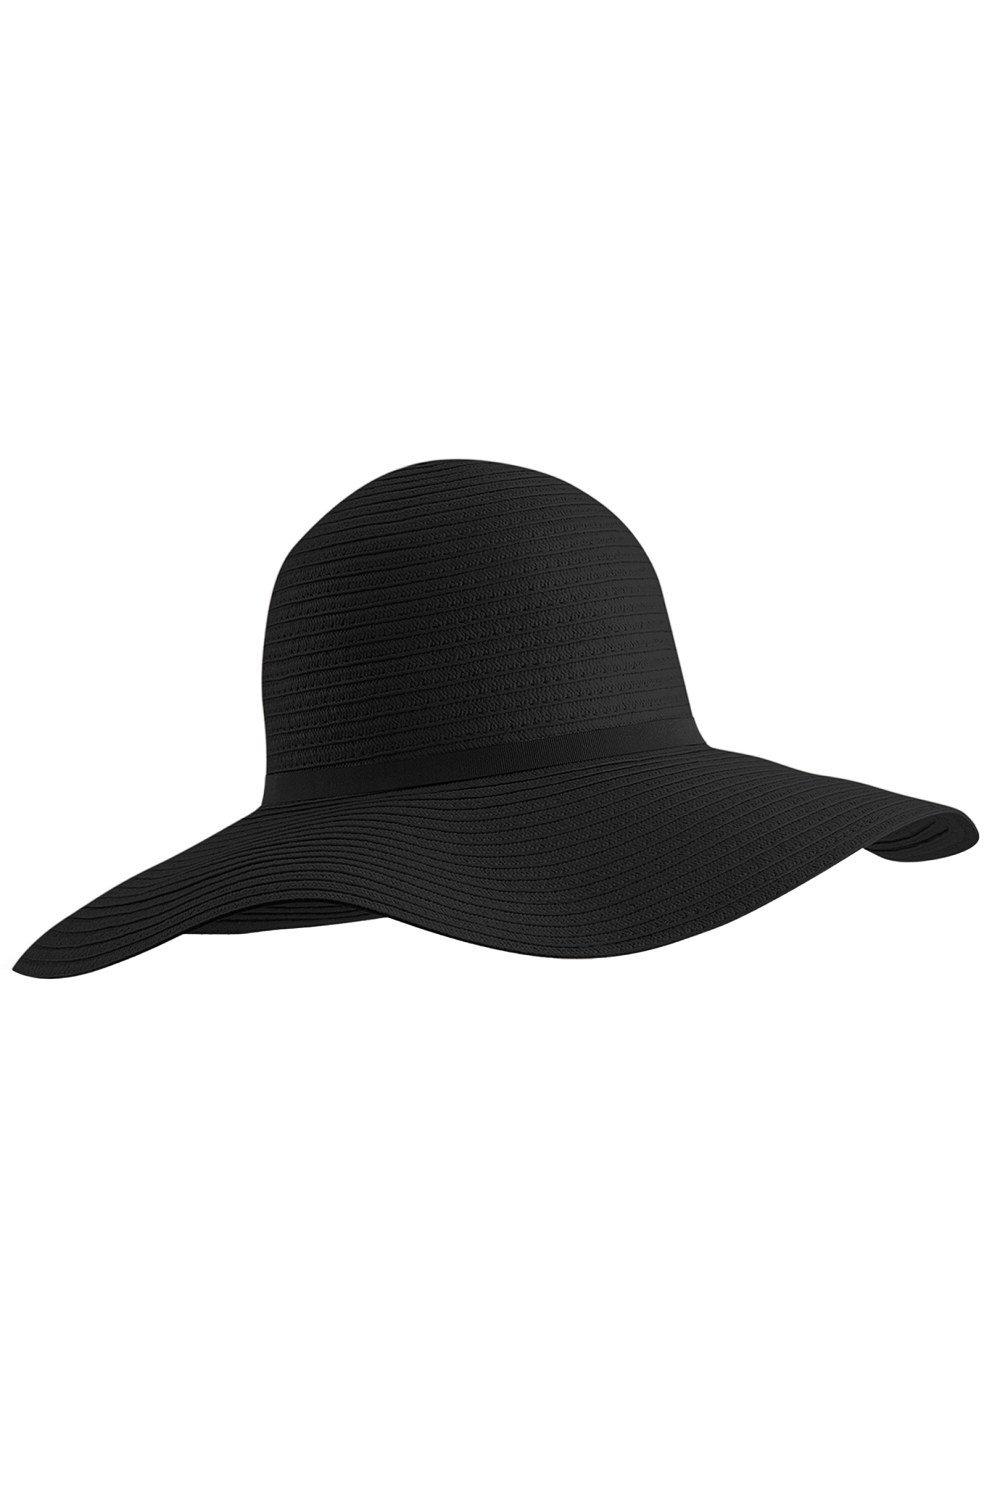 Шляпа от солнца с широкими полями Marbella Beechfield, черный шляпа женская с широкими полями и бантом складная соломенная панама от солнца с защитой от ультрафиолета для пляжа летняя